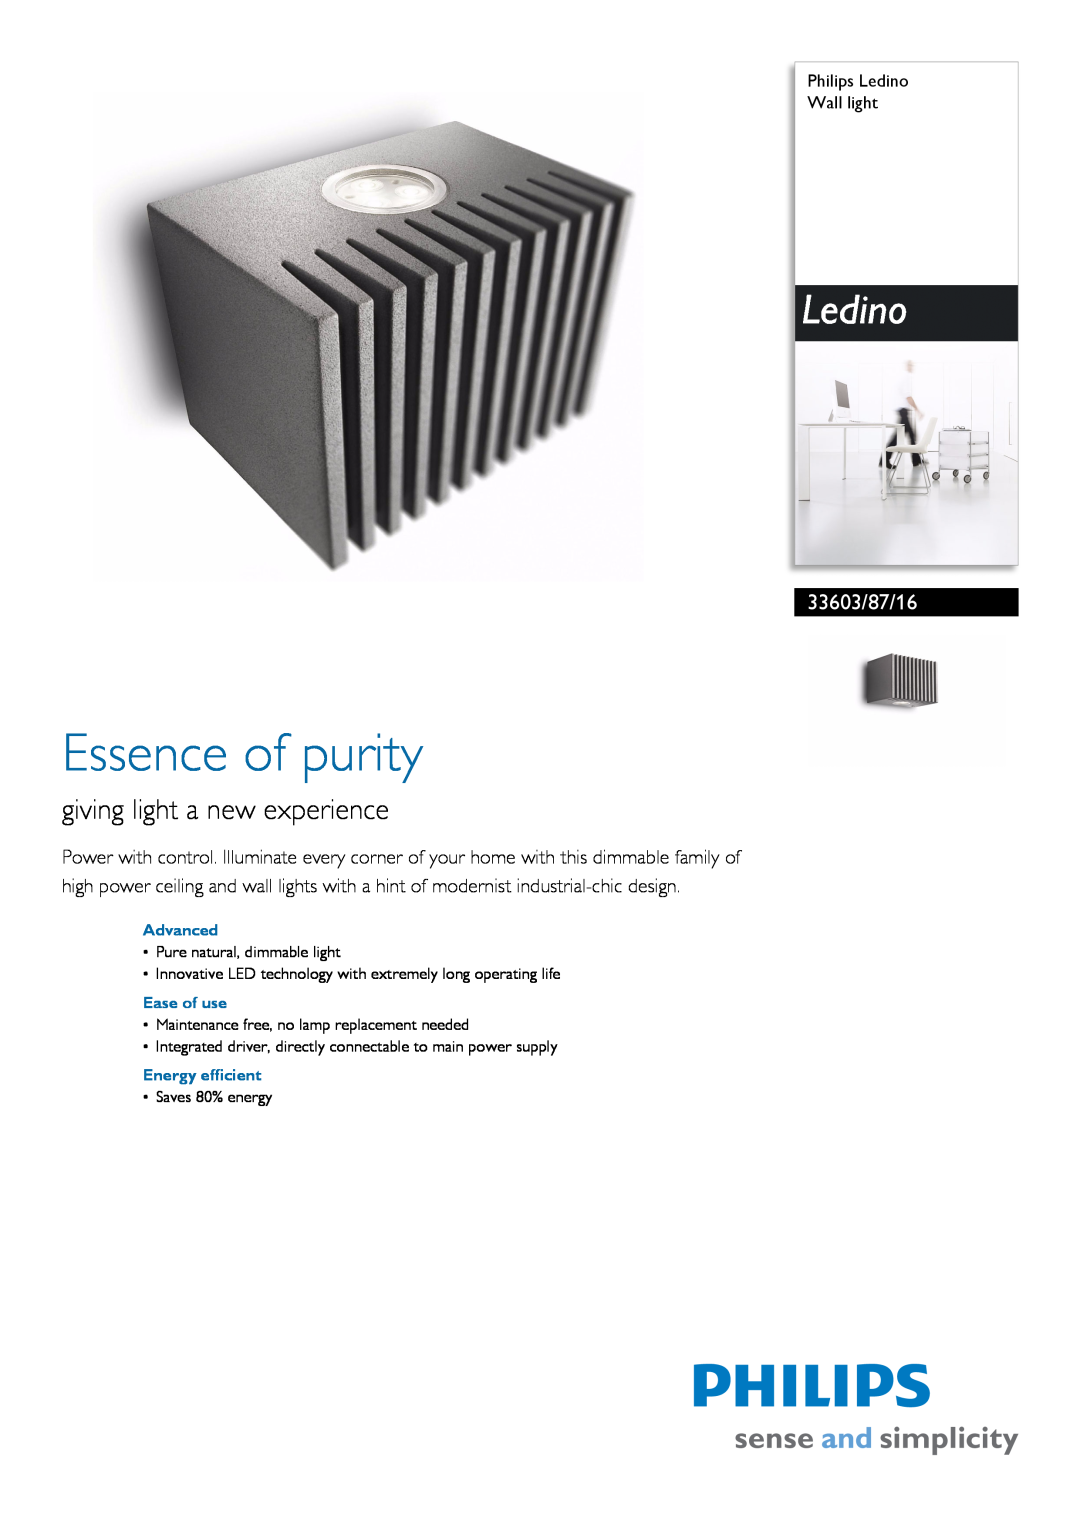 Philips 33603/87/16 manual Philips Ledino Wall light, Advanced, Ease of use, Energy efficient, Essence of purity 